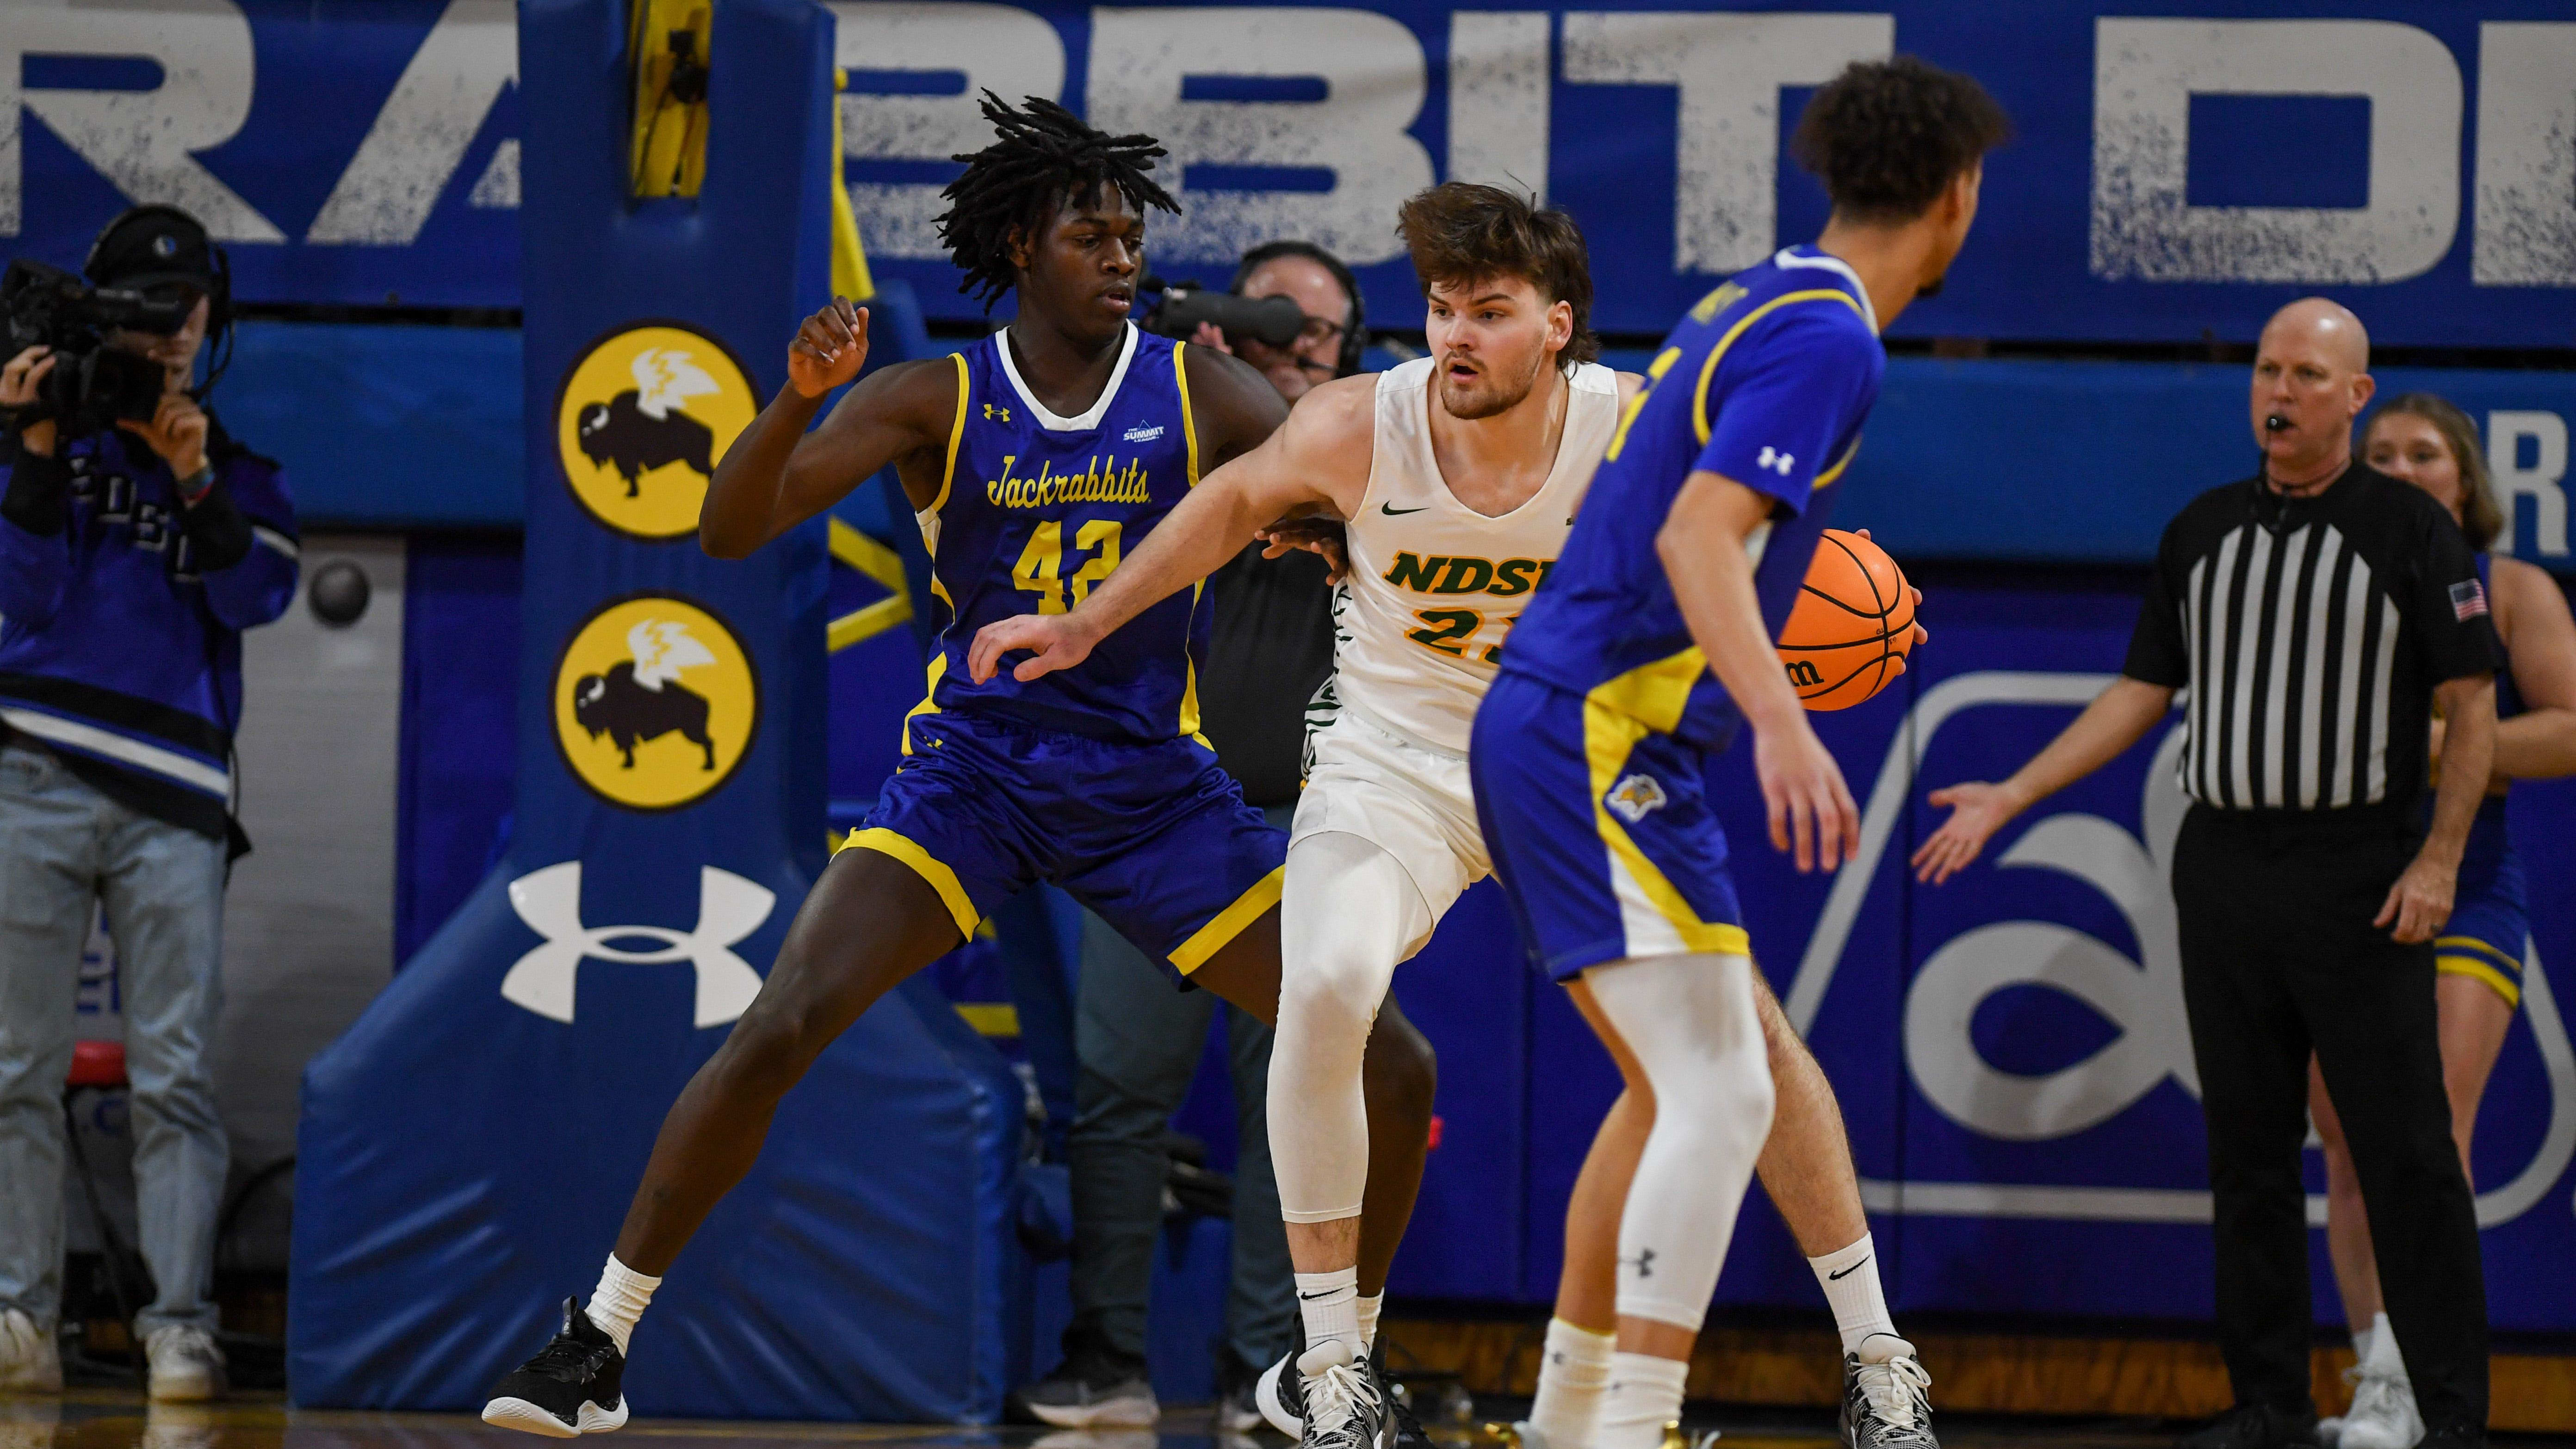 NDSU standout Andrew Morgan deciding between Creighton & Nebraska after declining University of Minnesota for final season of basketball